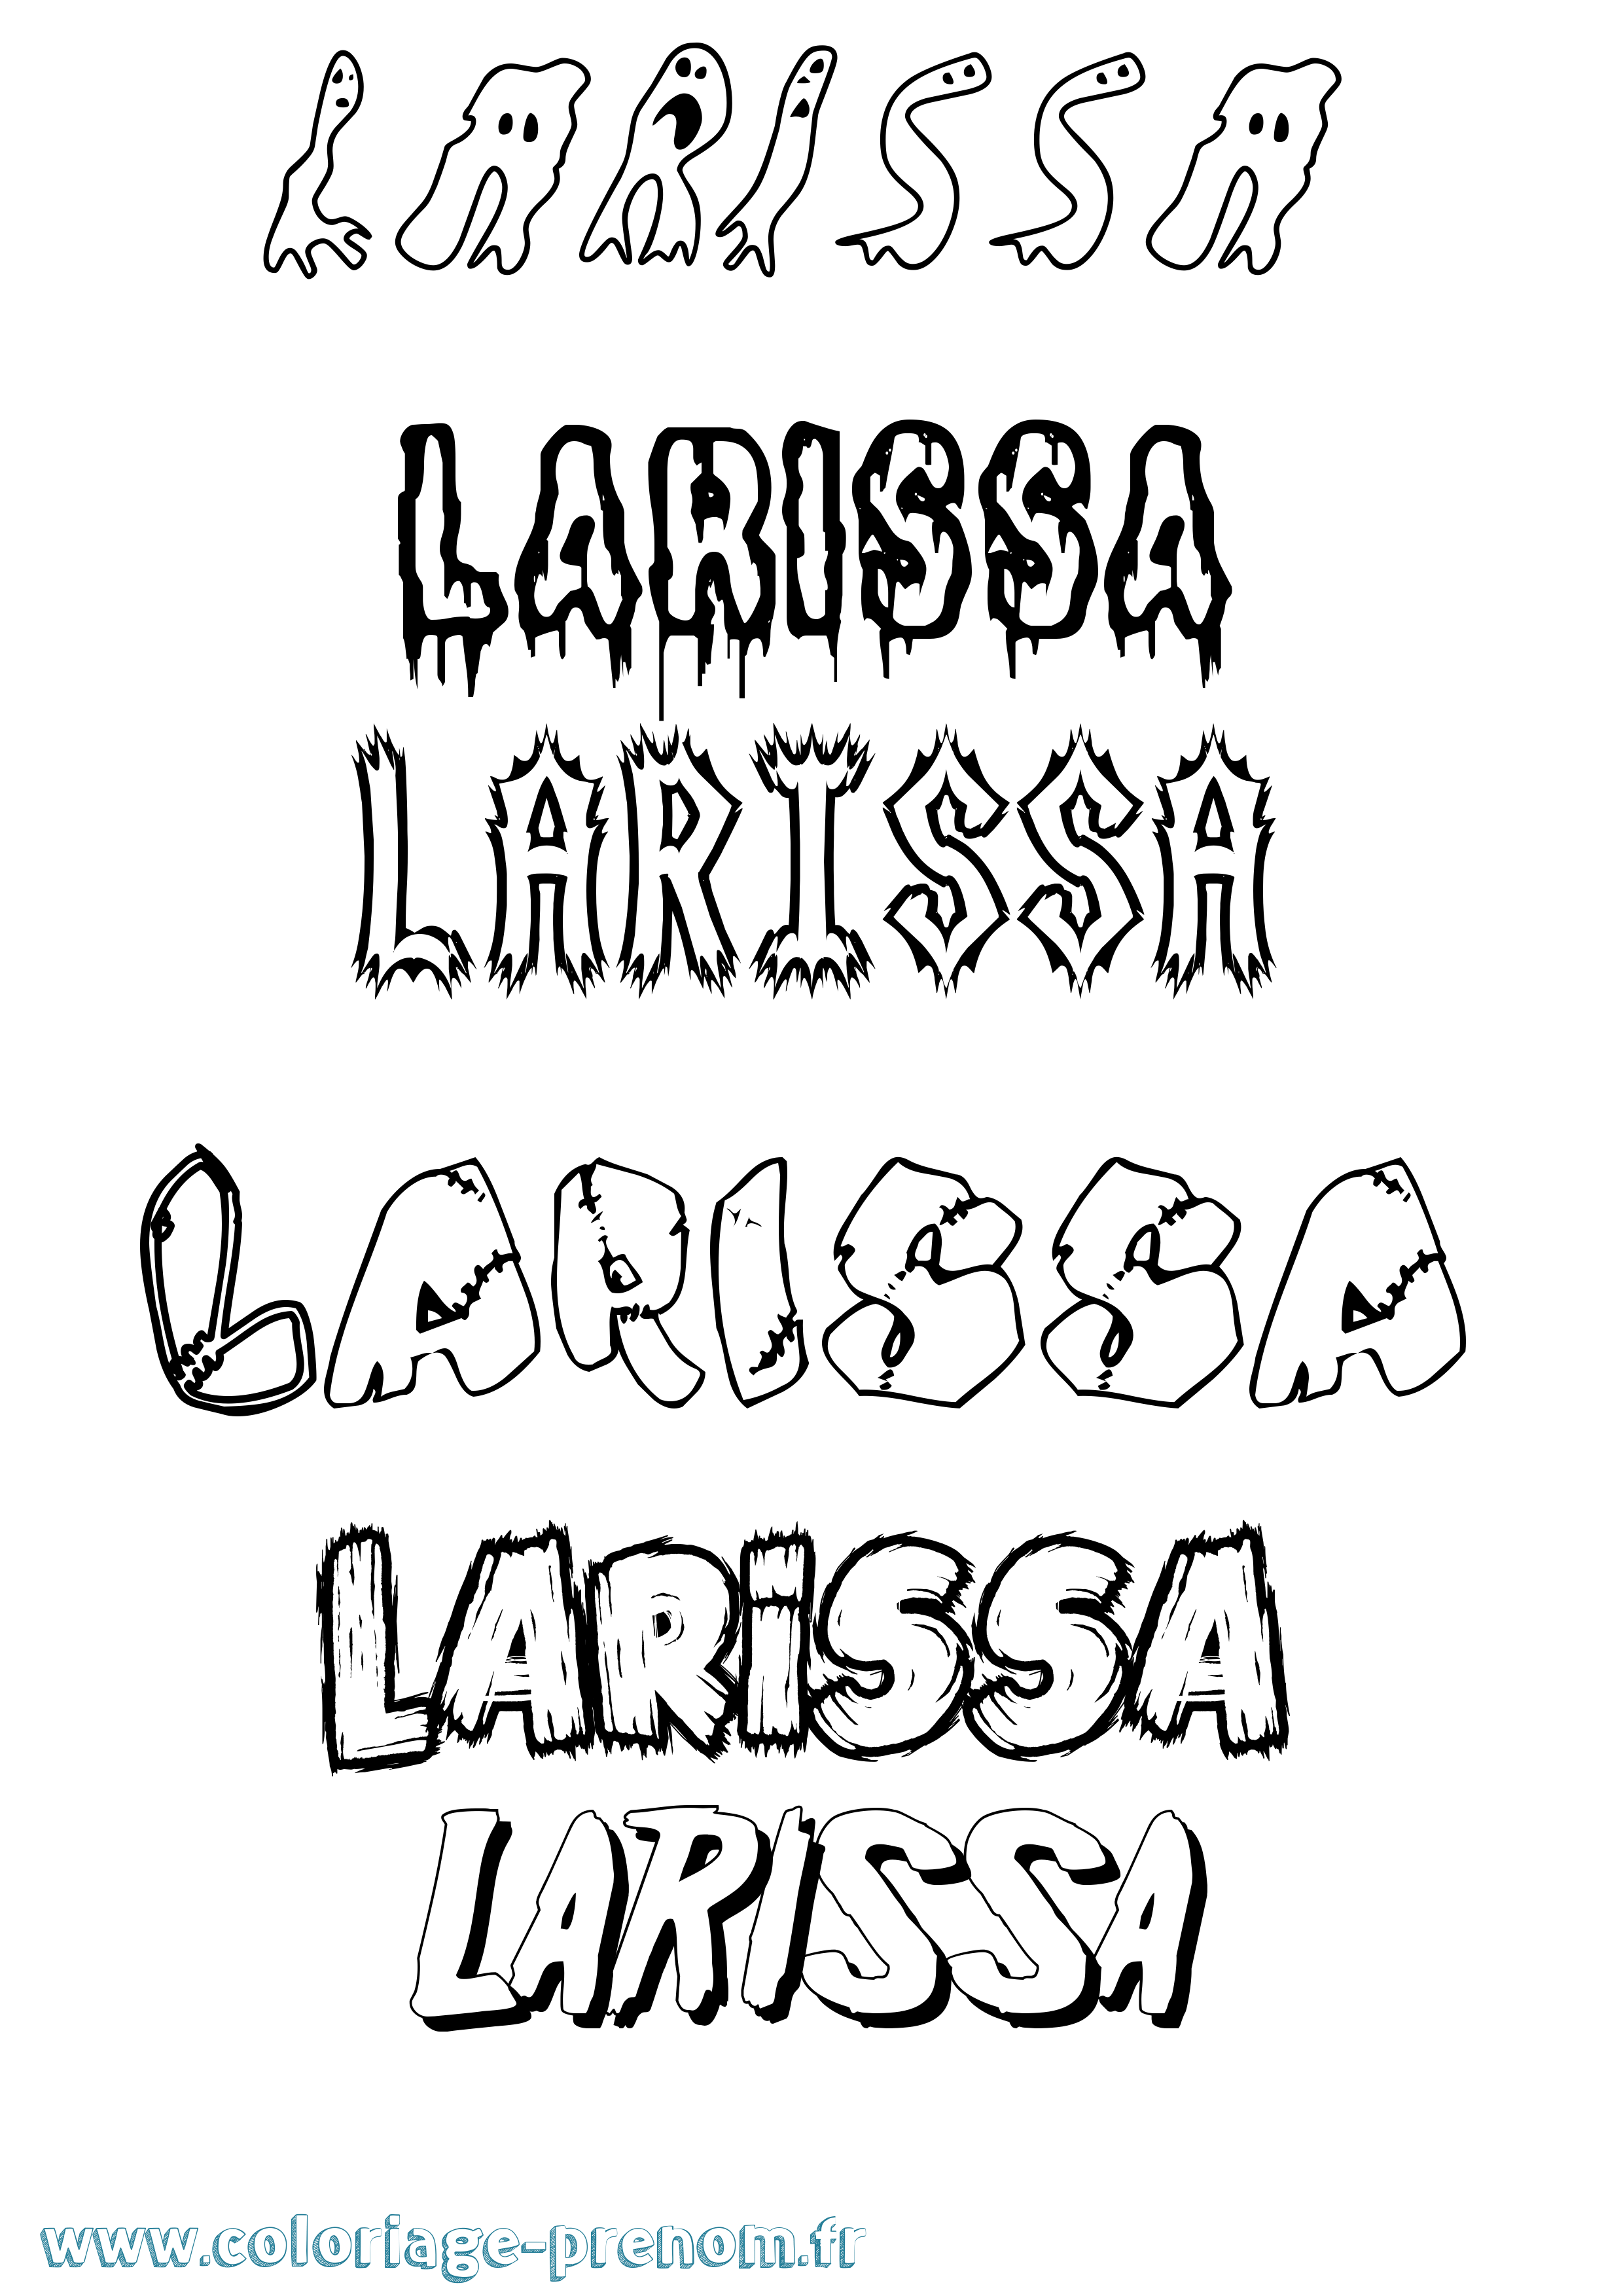 Coloriage prénom Larissa Frisson